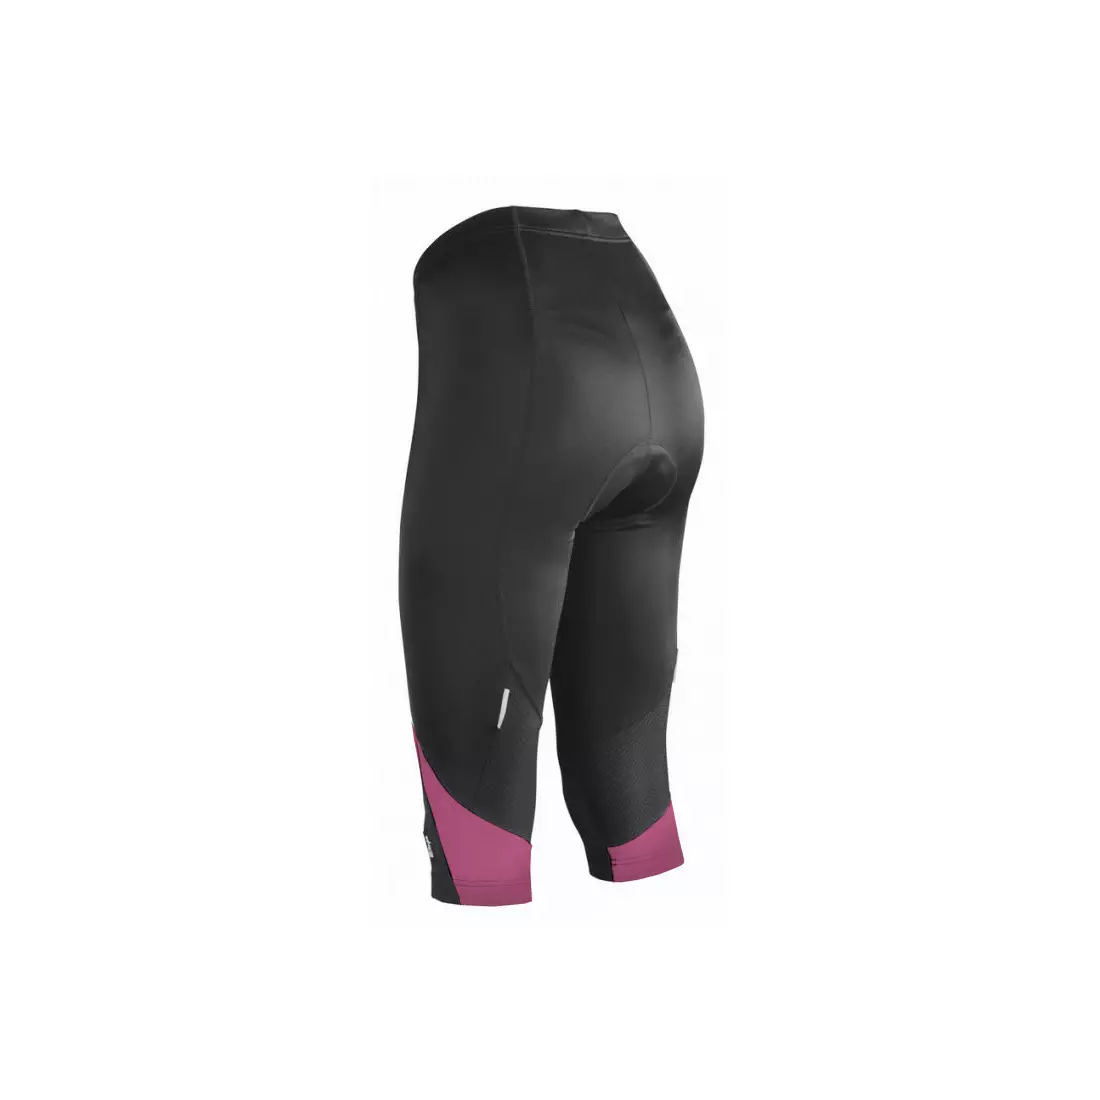 ETAPE NATTY women's 3/4 shorts, color: black and pink 1402612